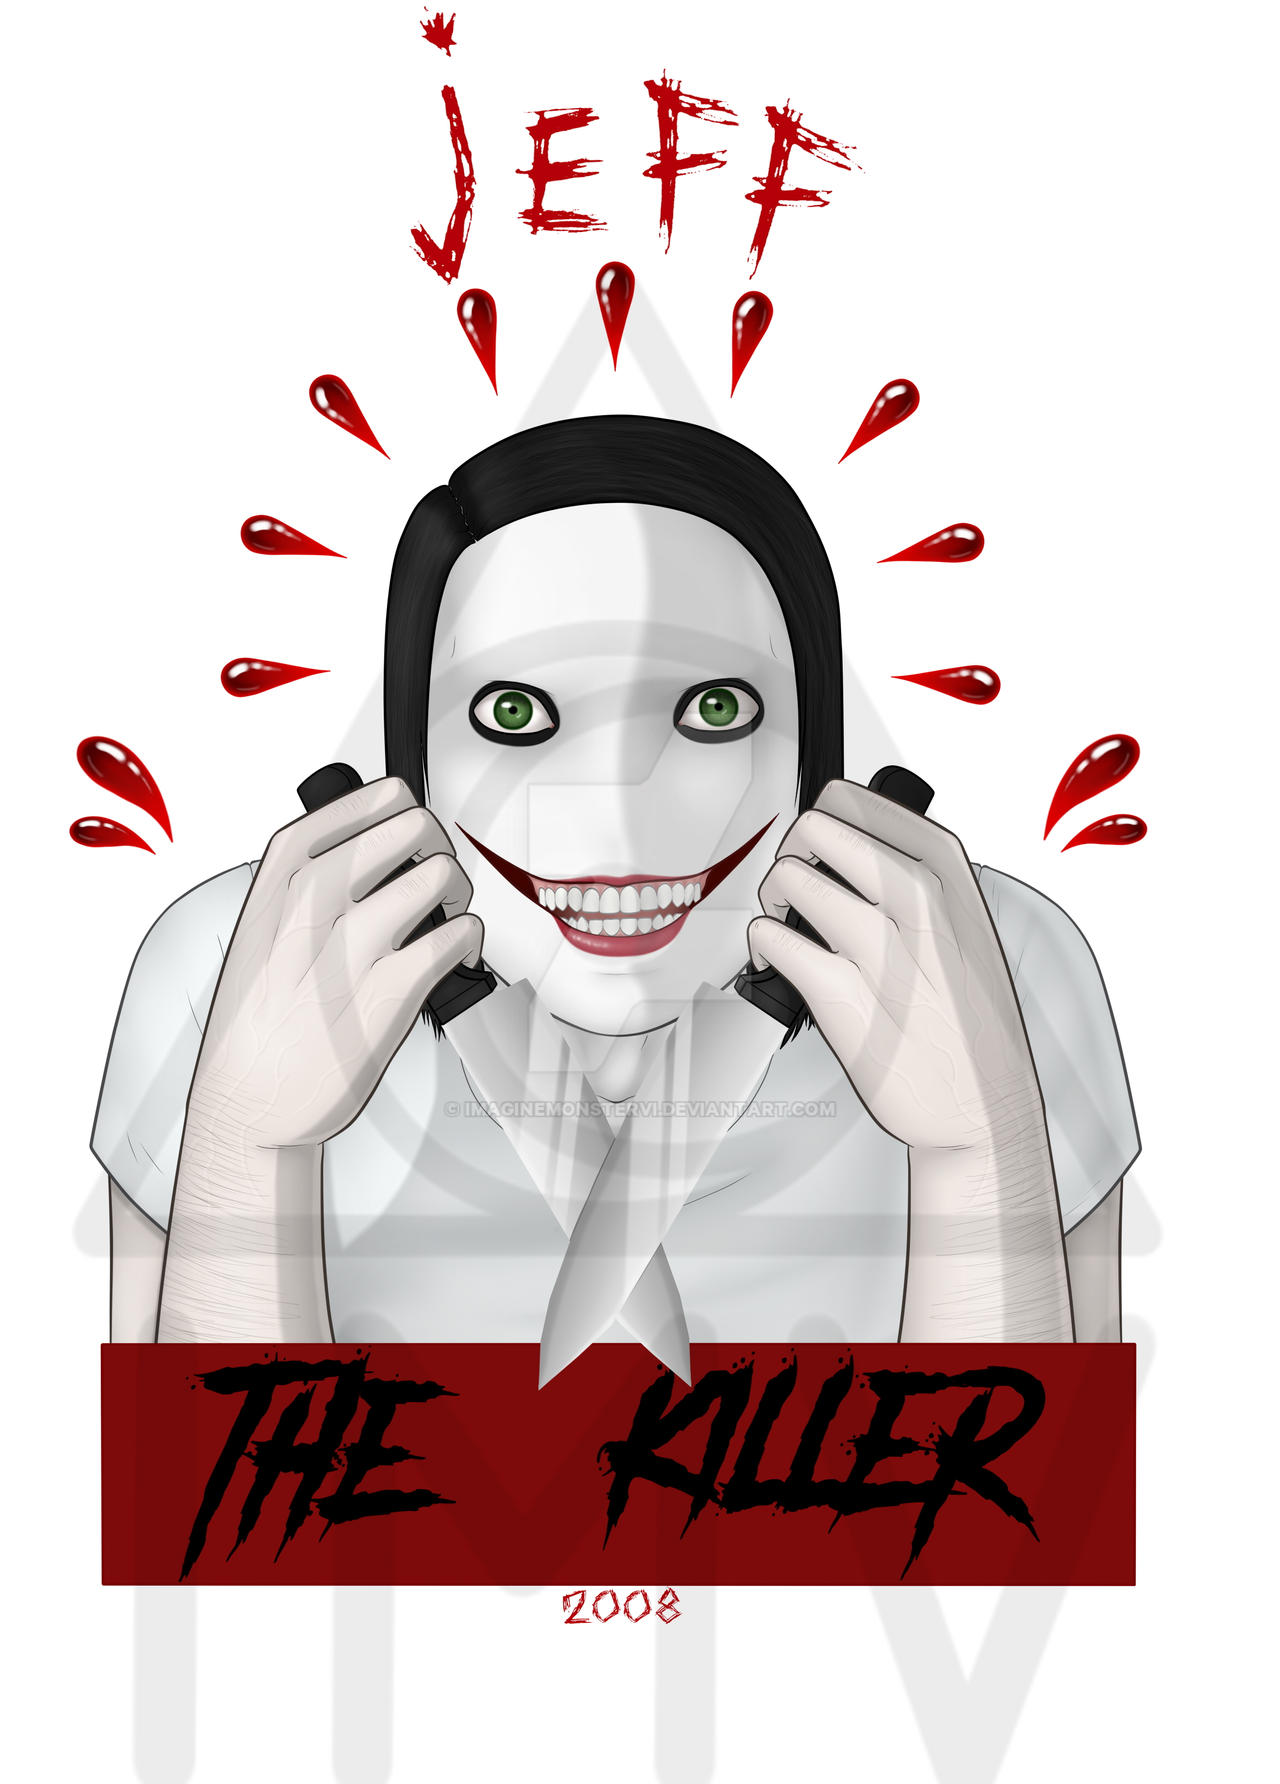 jeff the killer : r/creepypasta